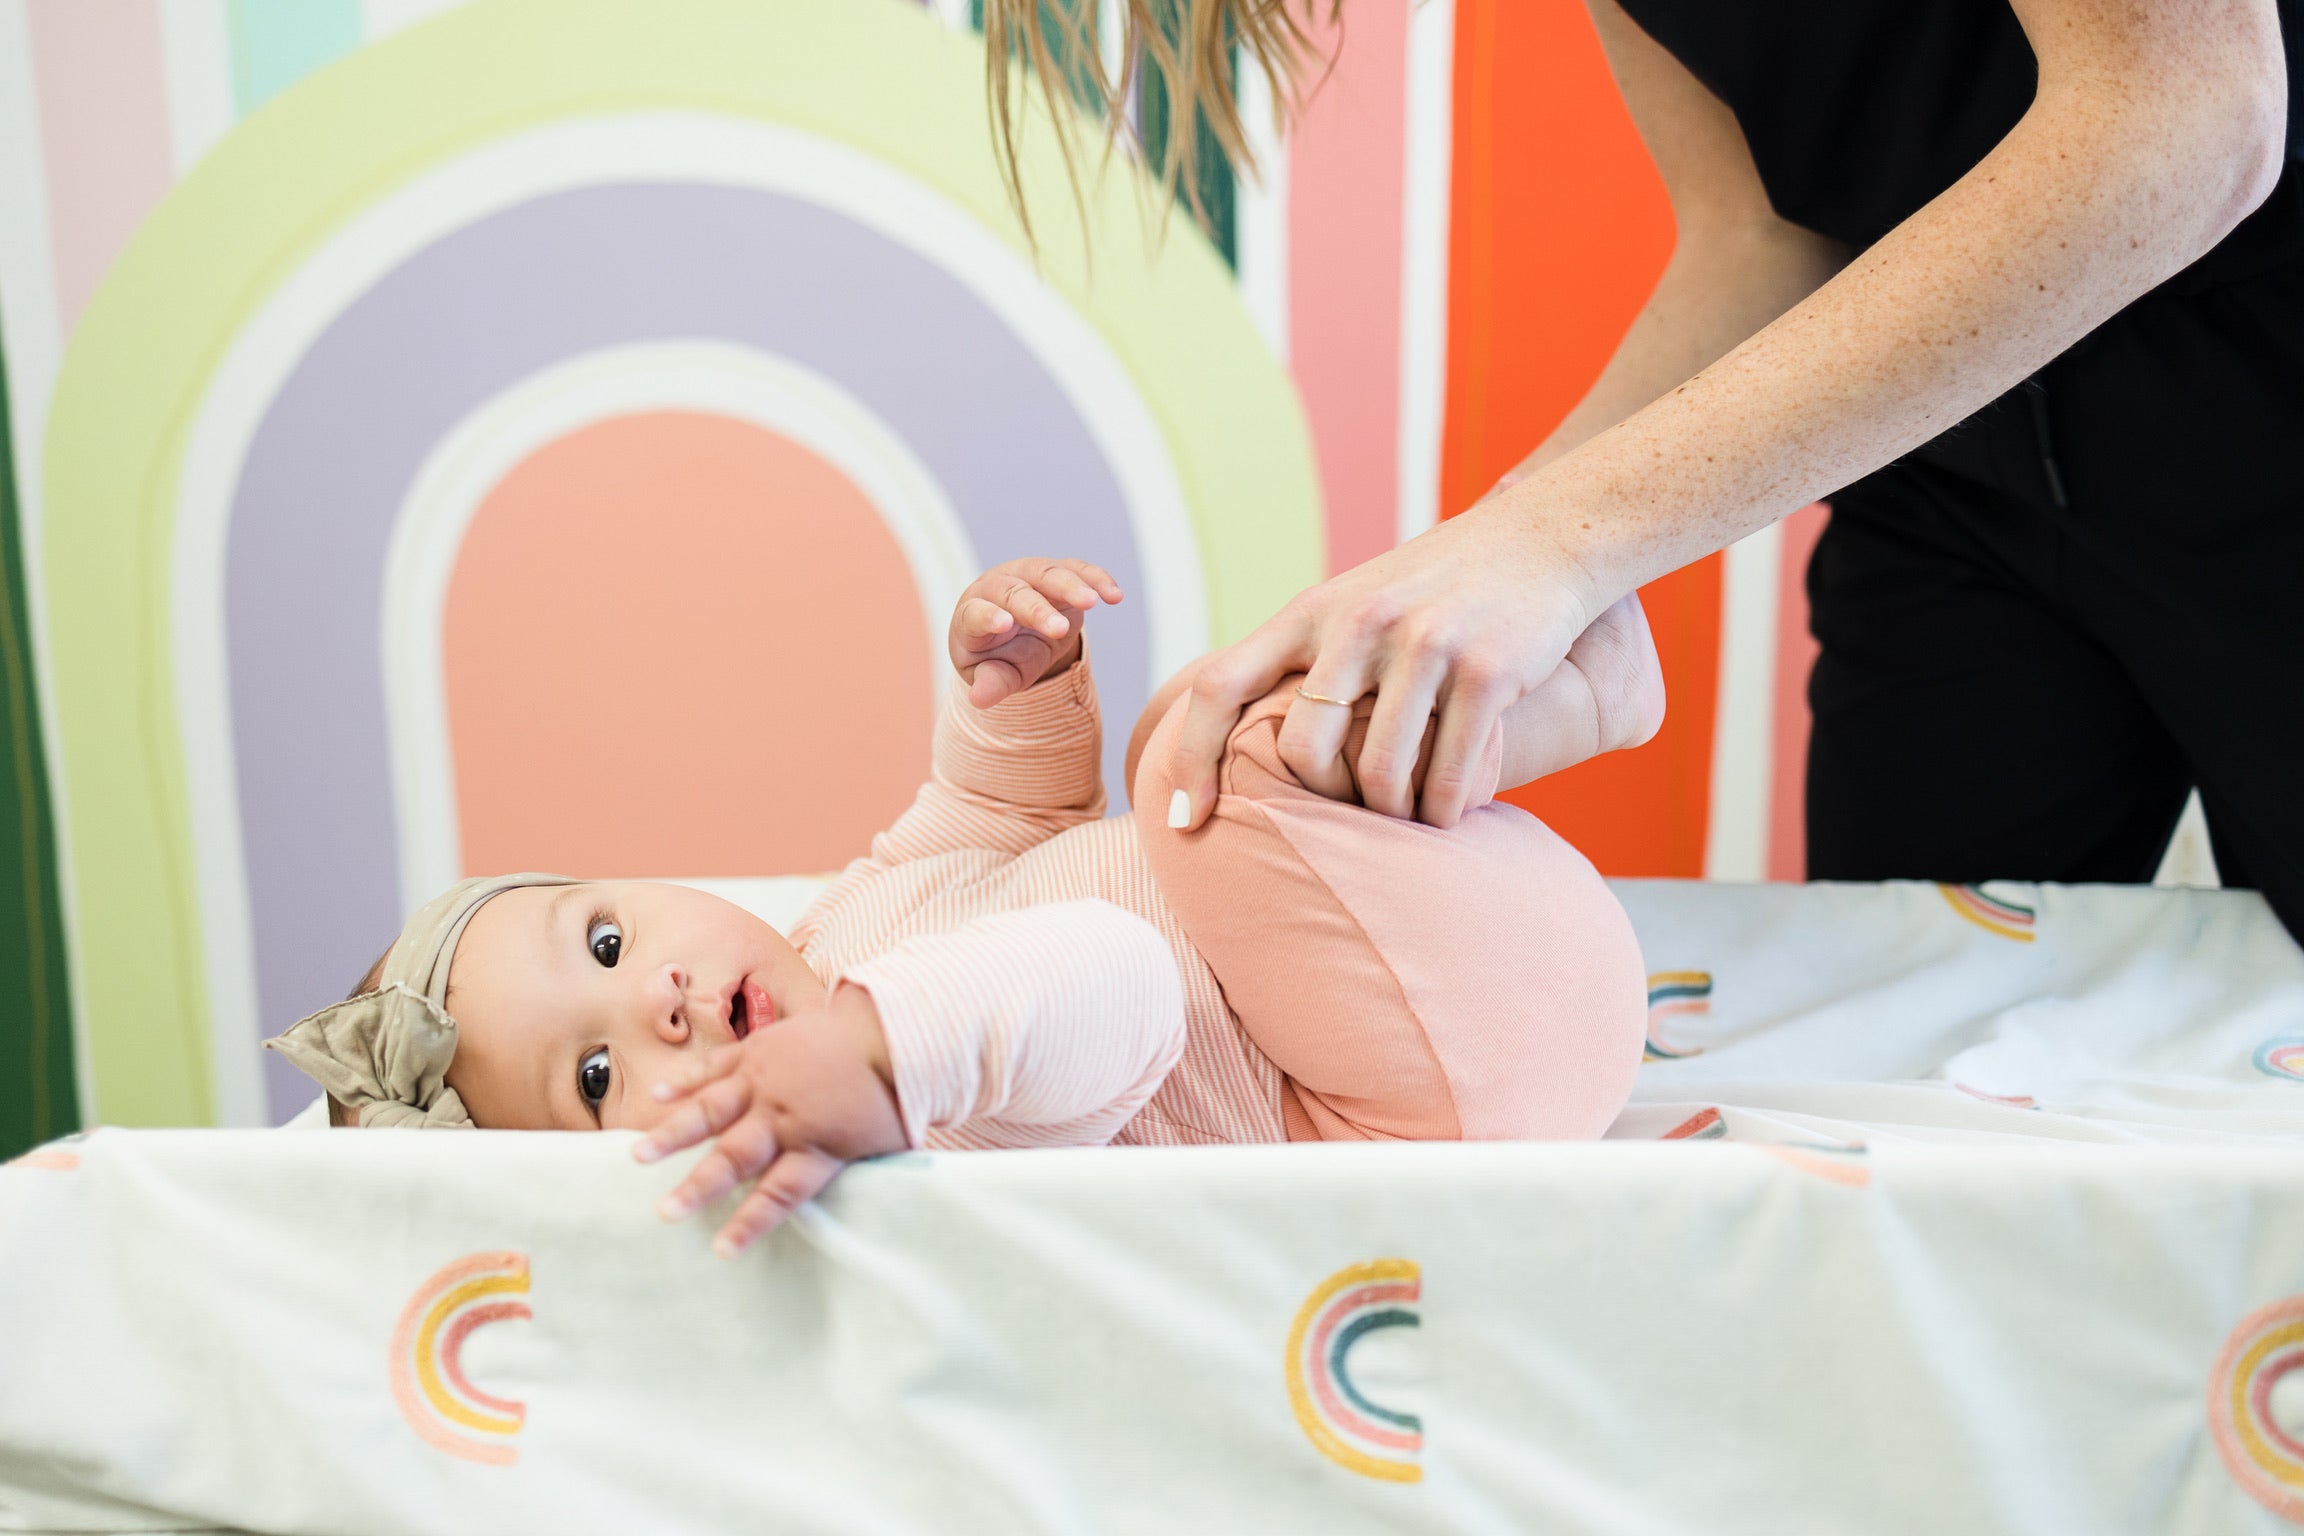 Baby chiropractor stretching baby’s lower body